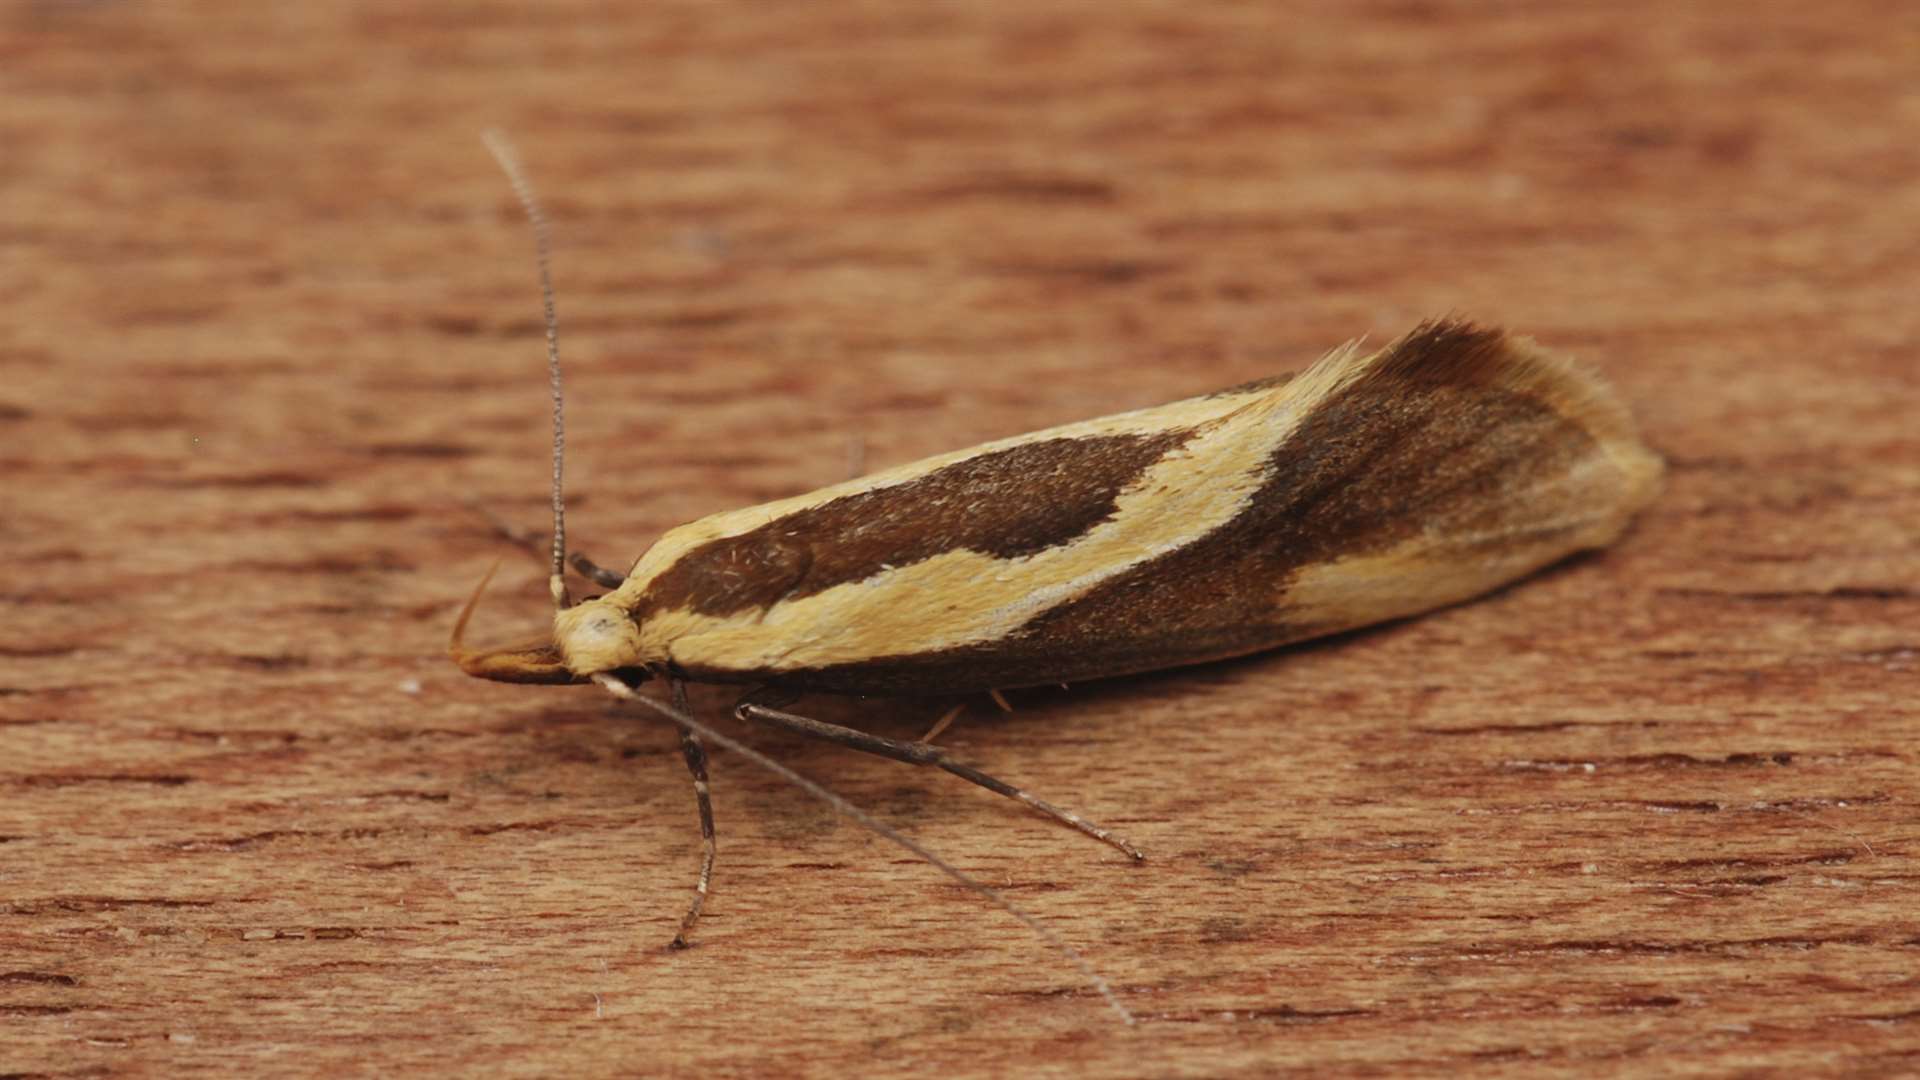 Harpella foficella micro moth at Holborough. Picture: Ross Newnham